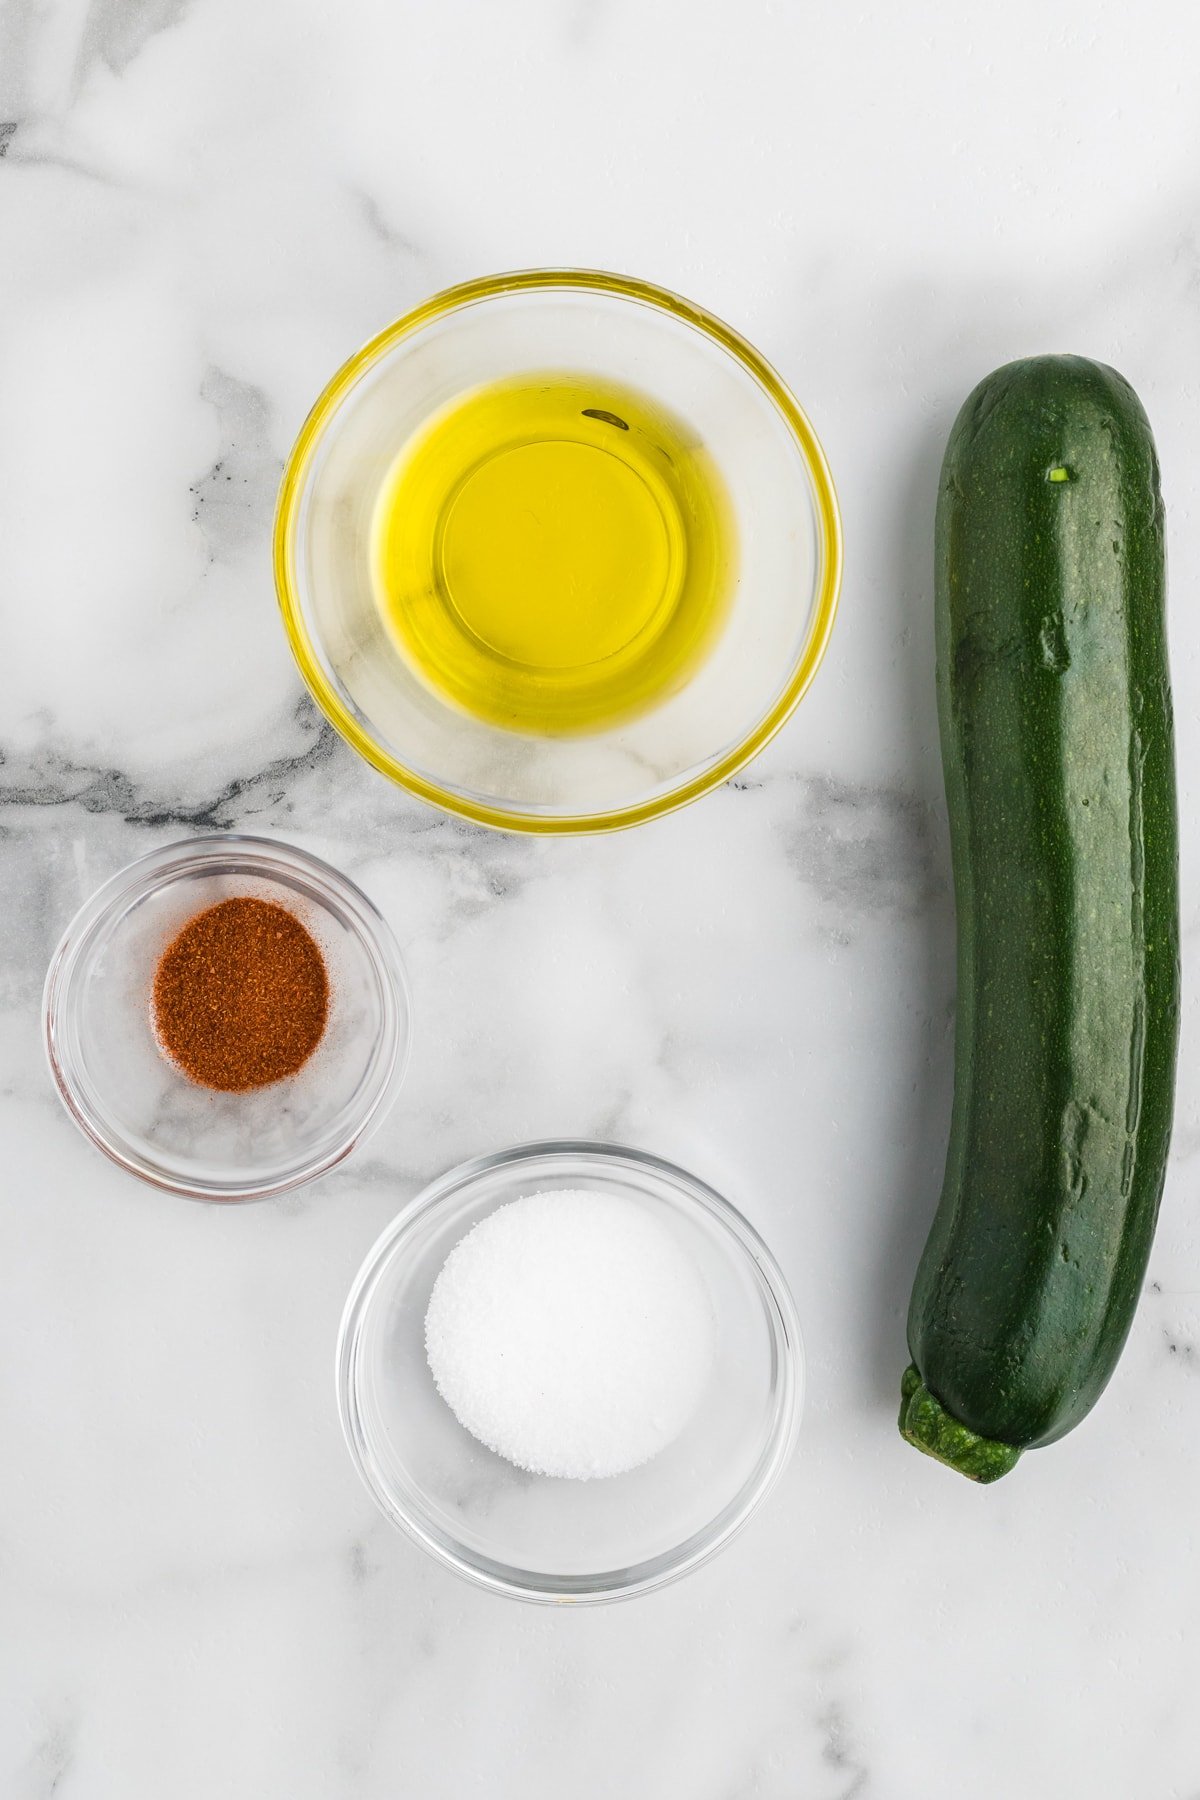 ingredients - paprika, salt, oil and zucchini